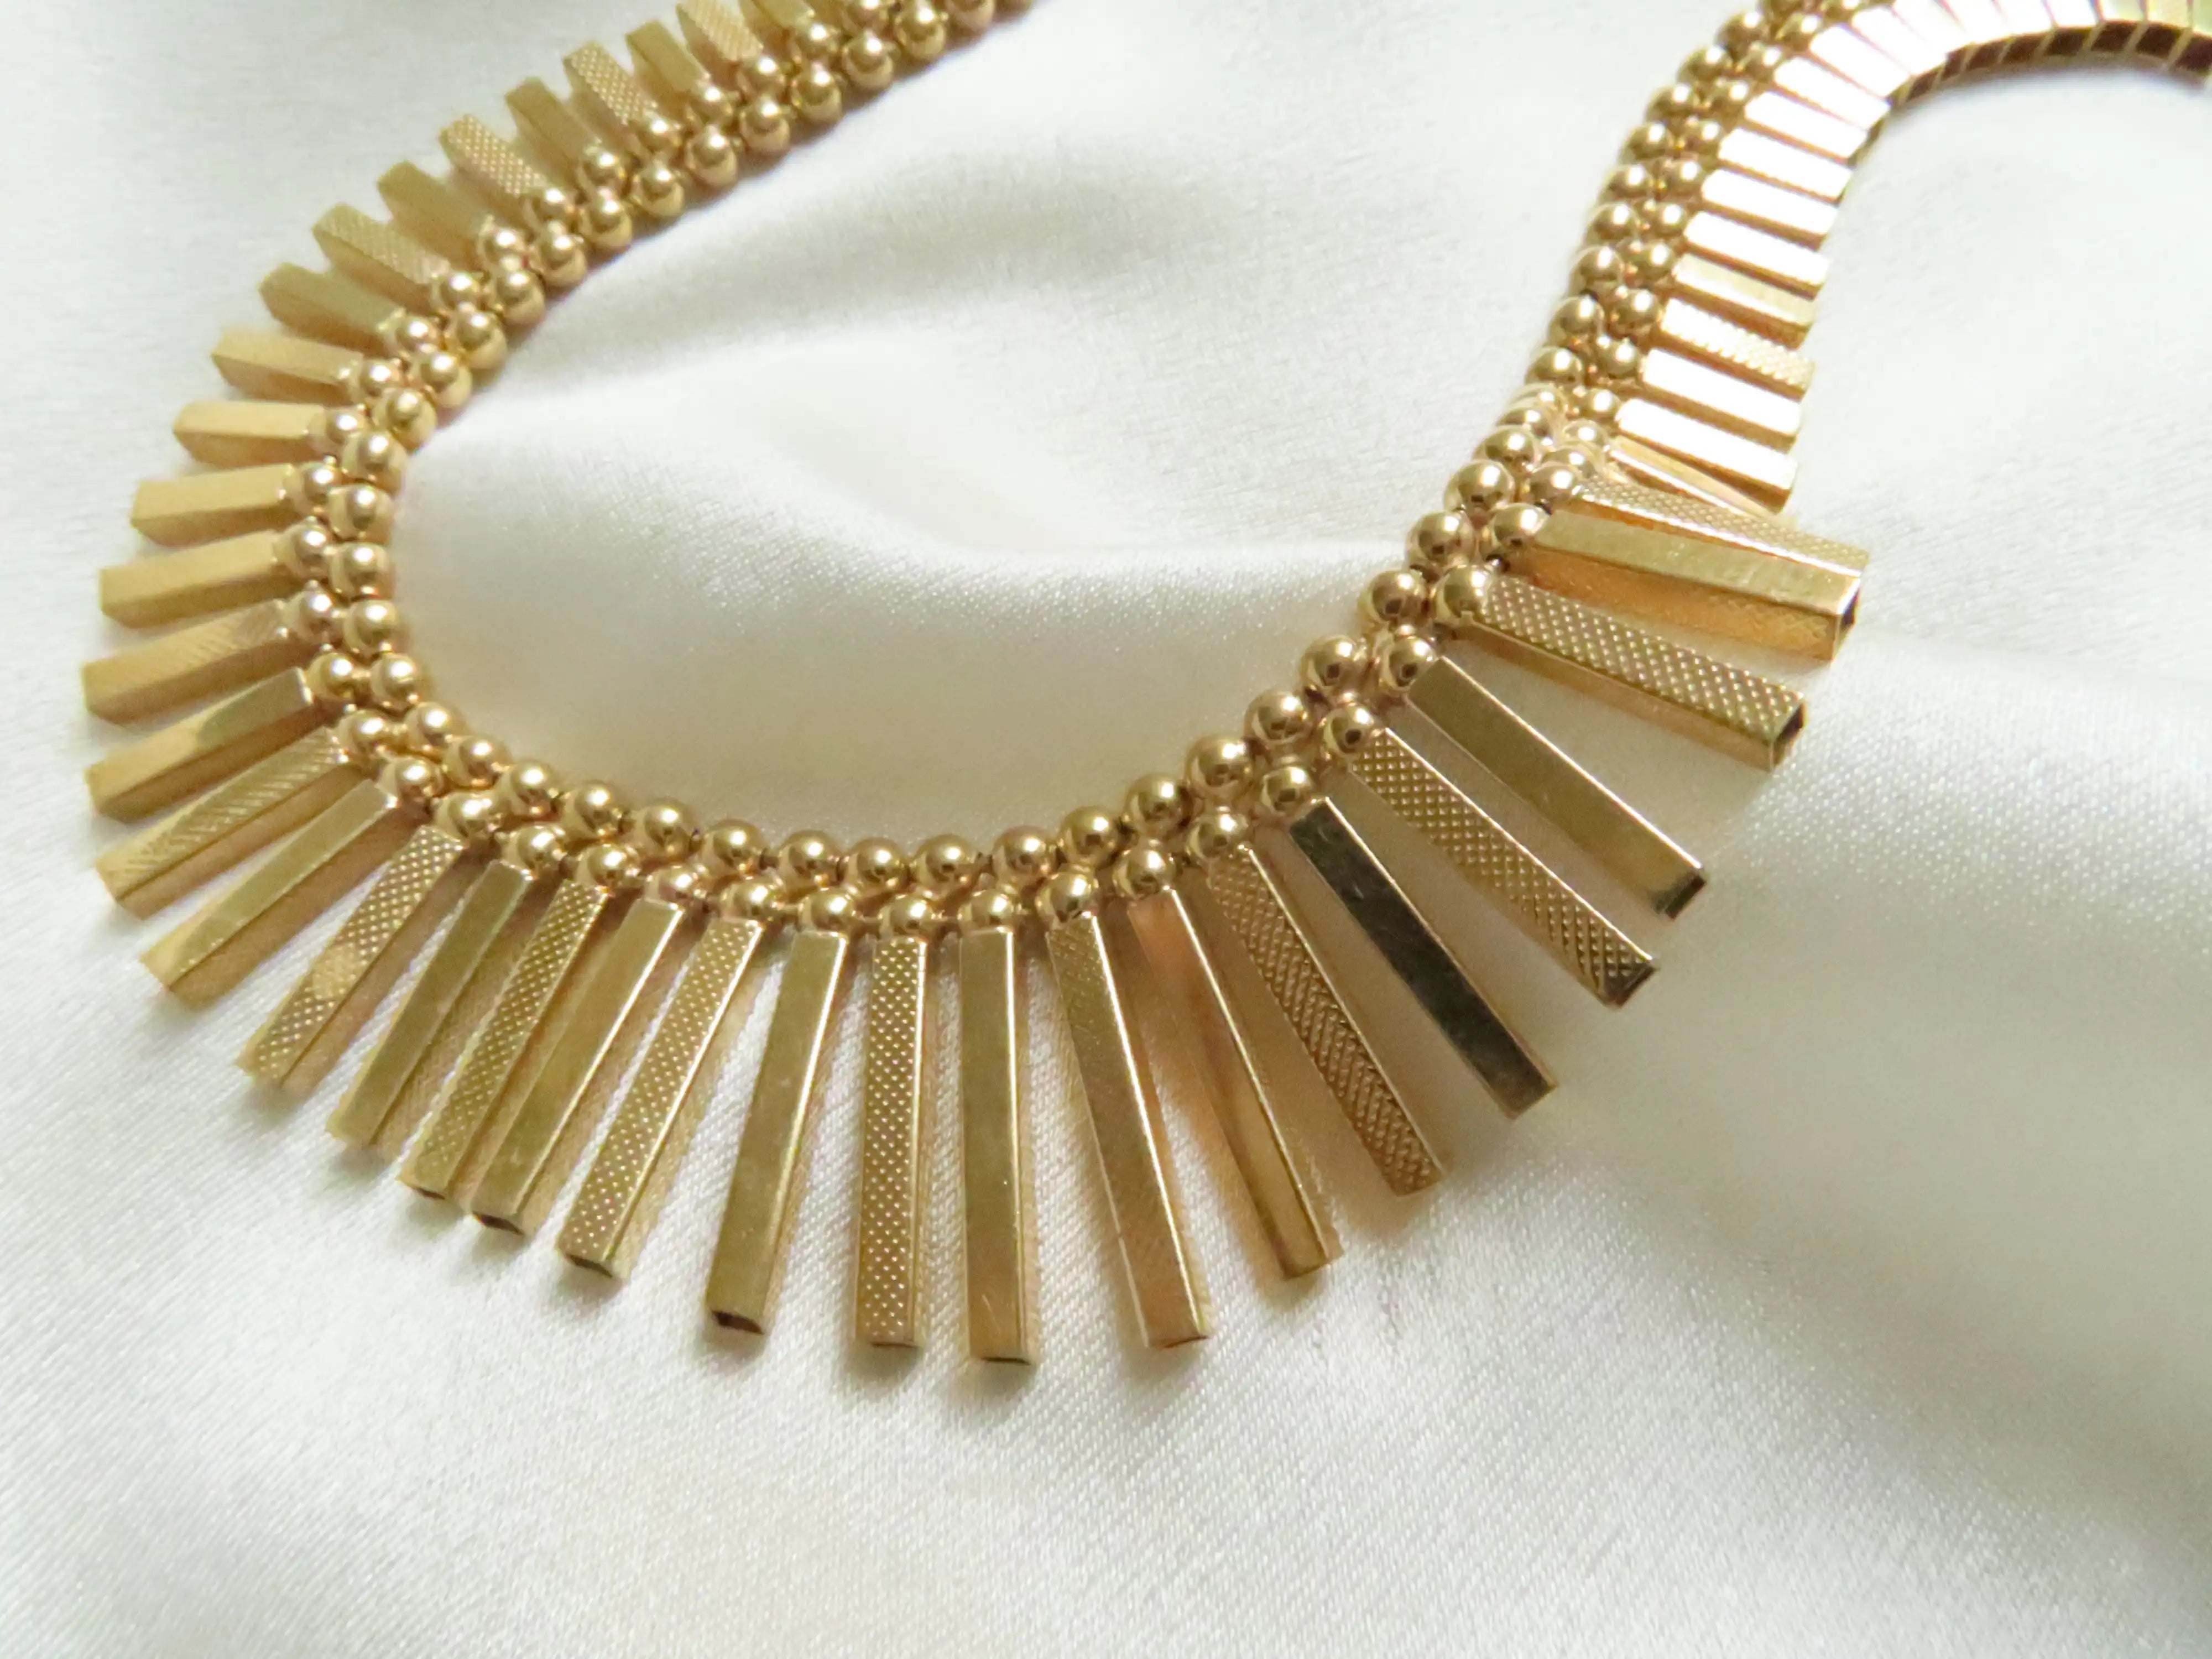 1980s cleopatra fringe necklace 9ct gold 27g